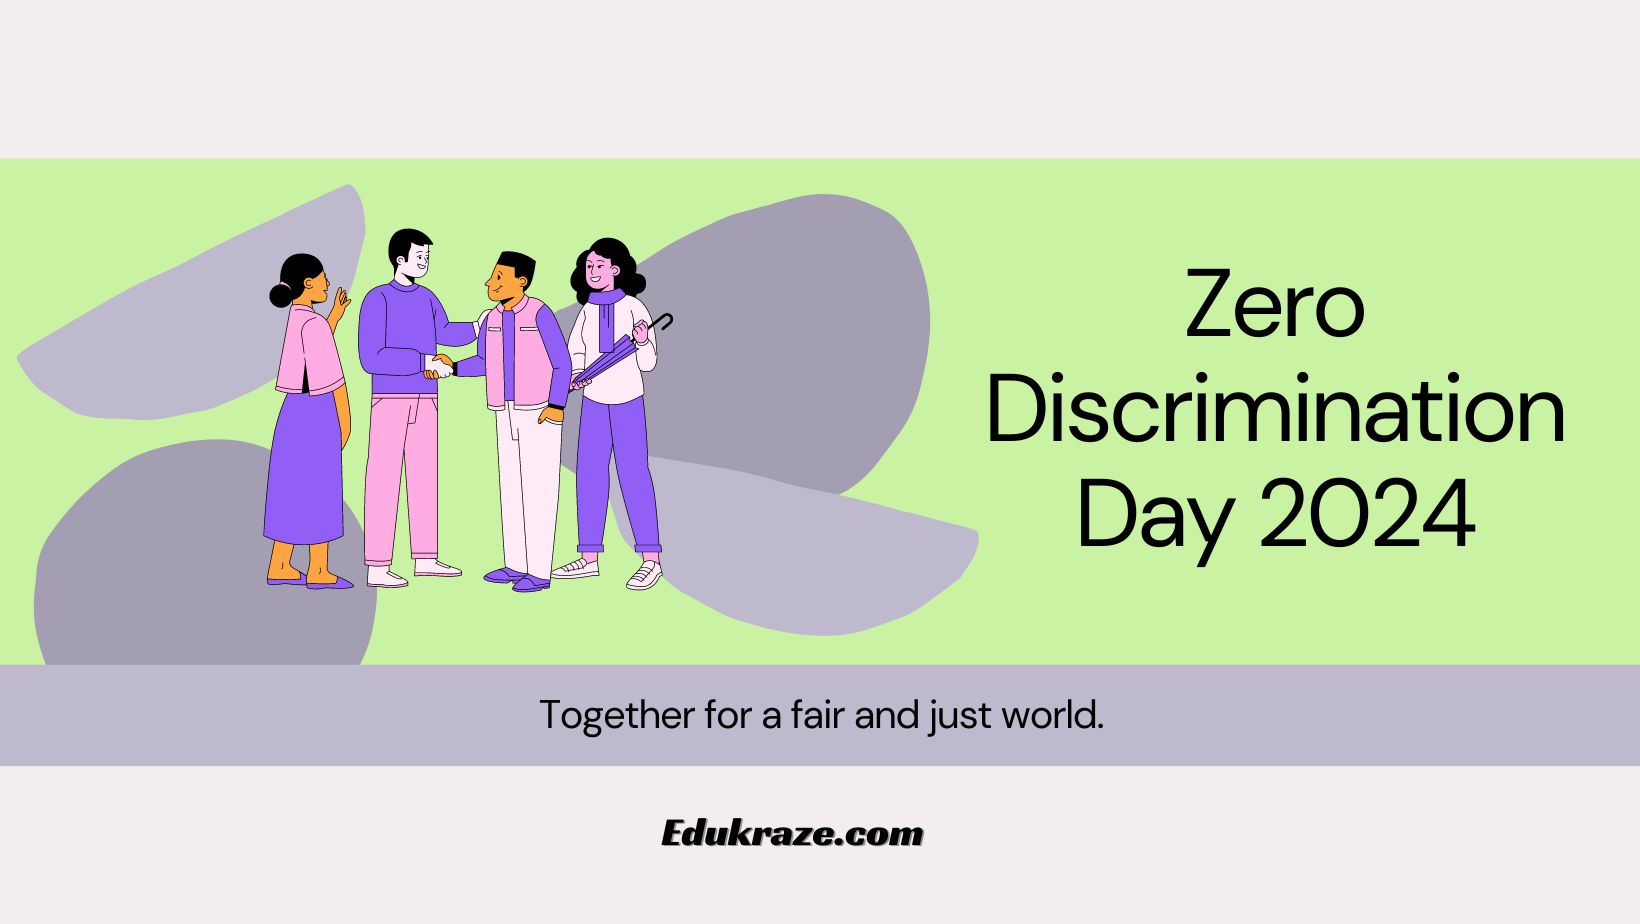 Zero Discrimination Day 2024: Celebrating Inclusion and Human Rights